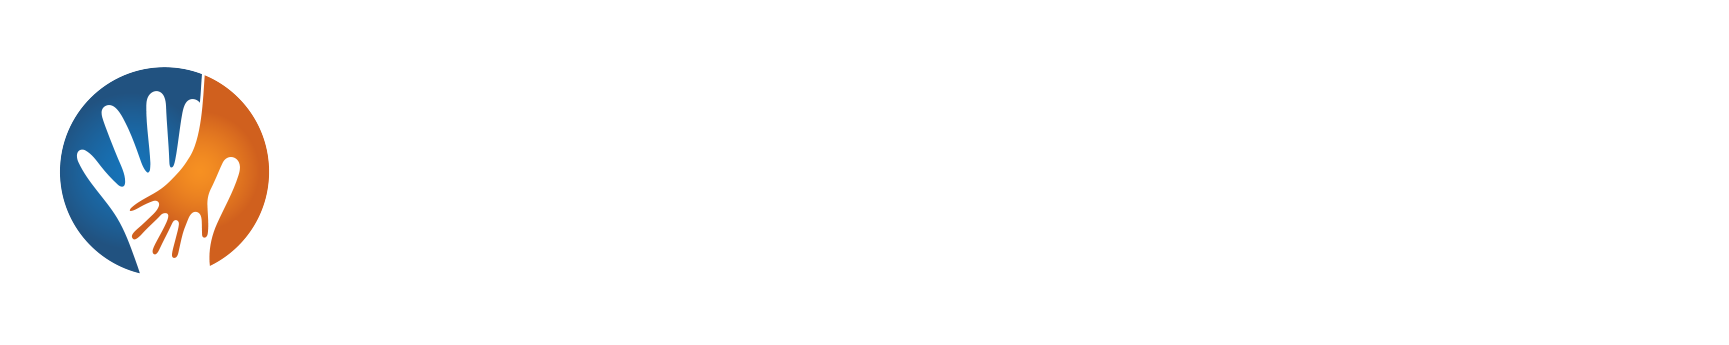 Community Capacity Building Network